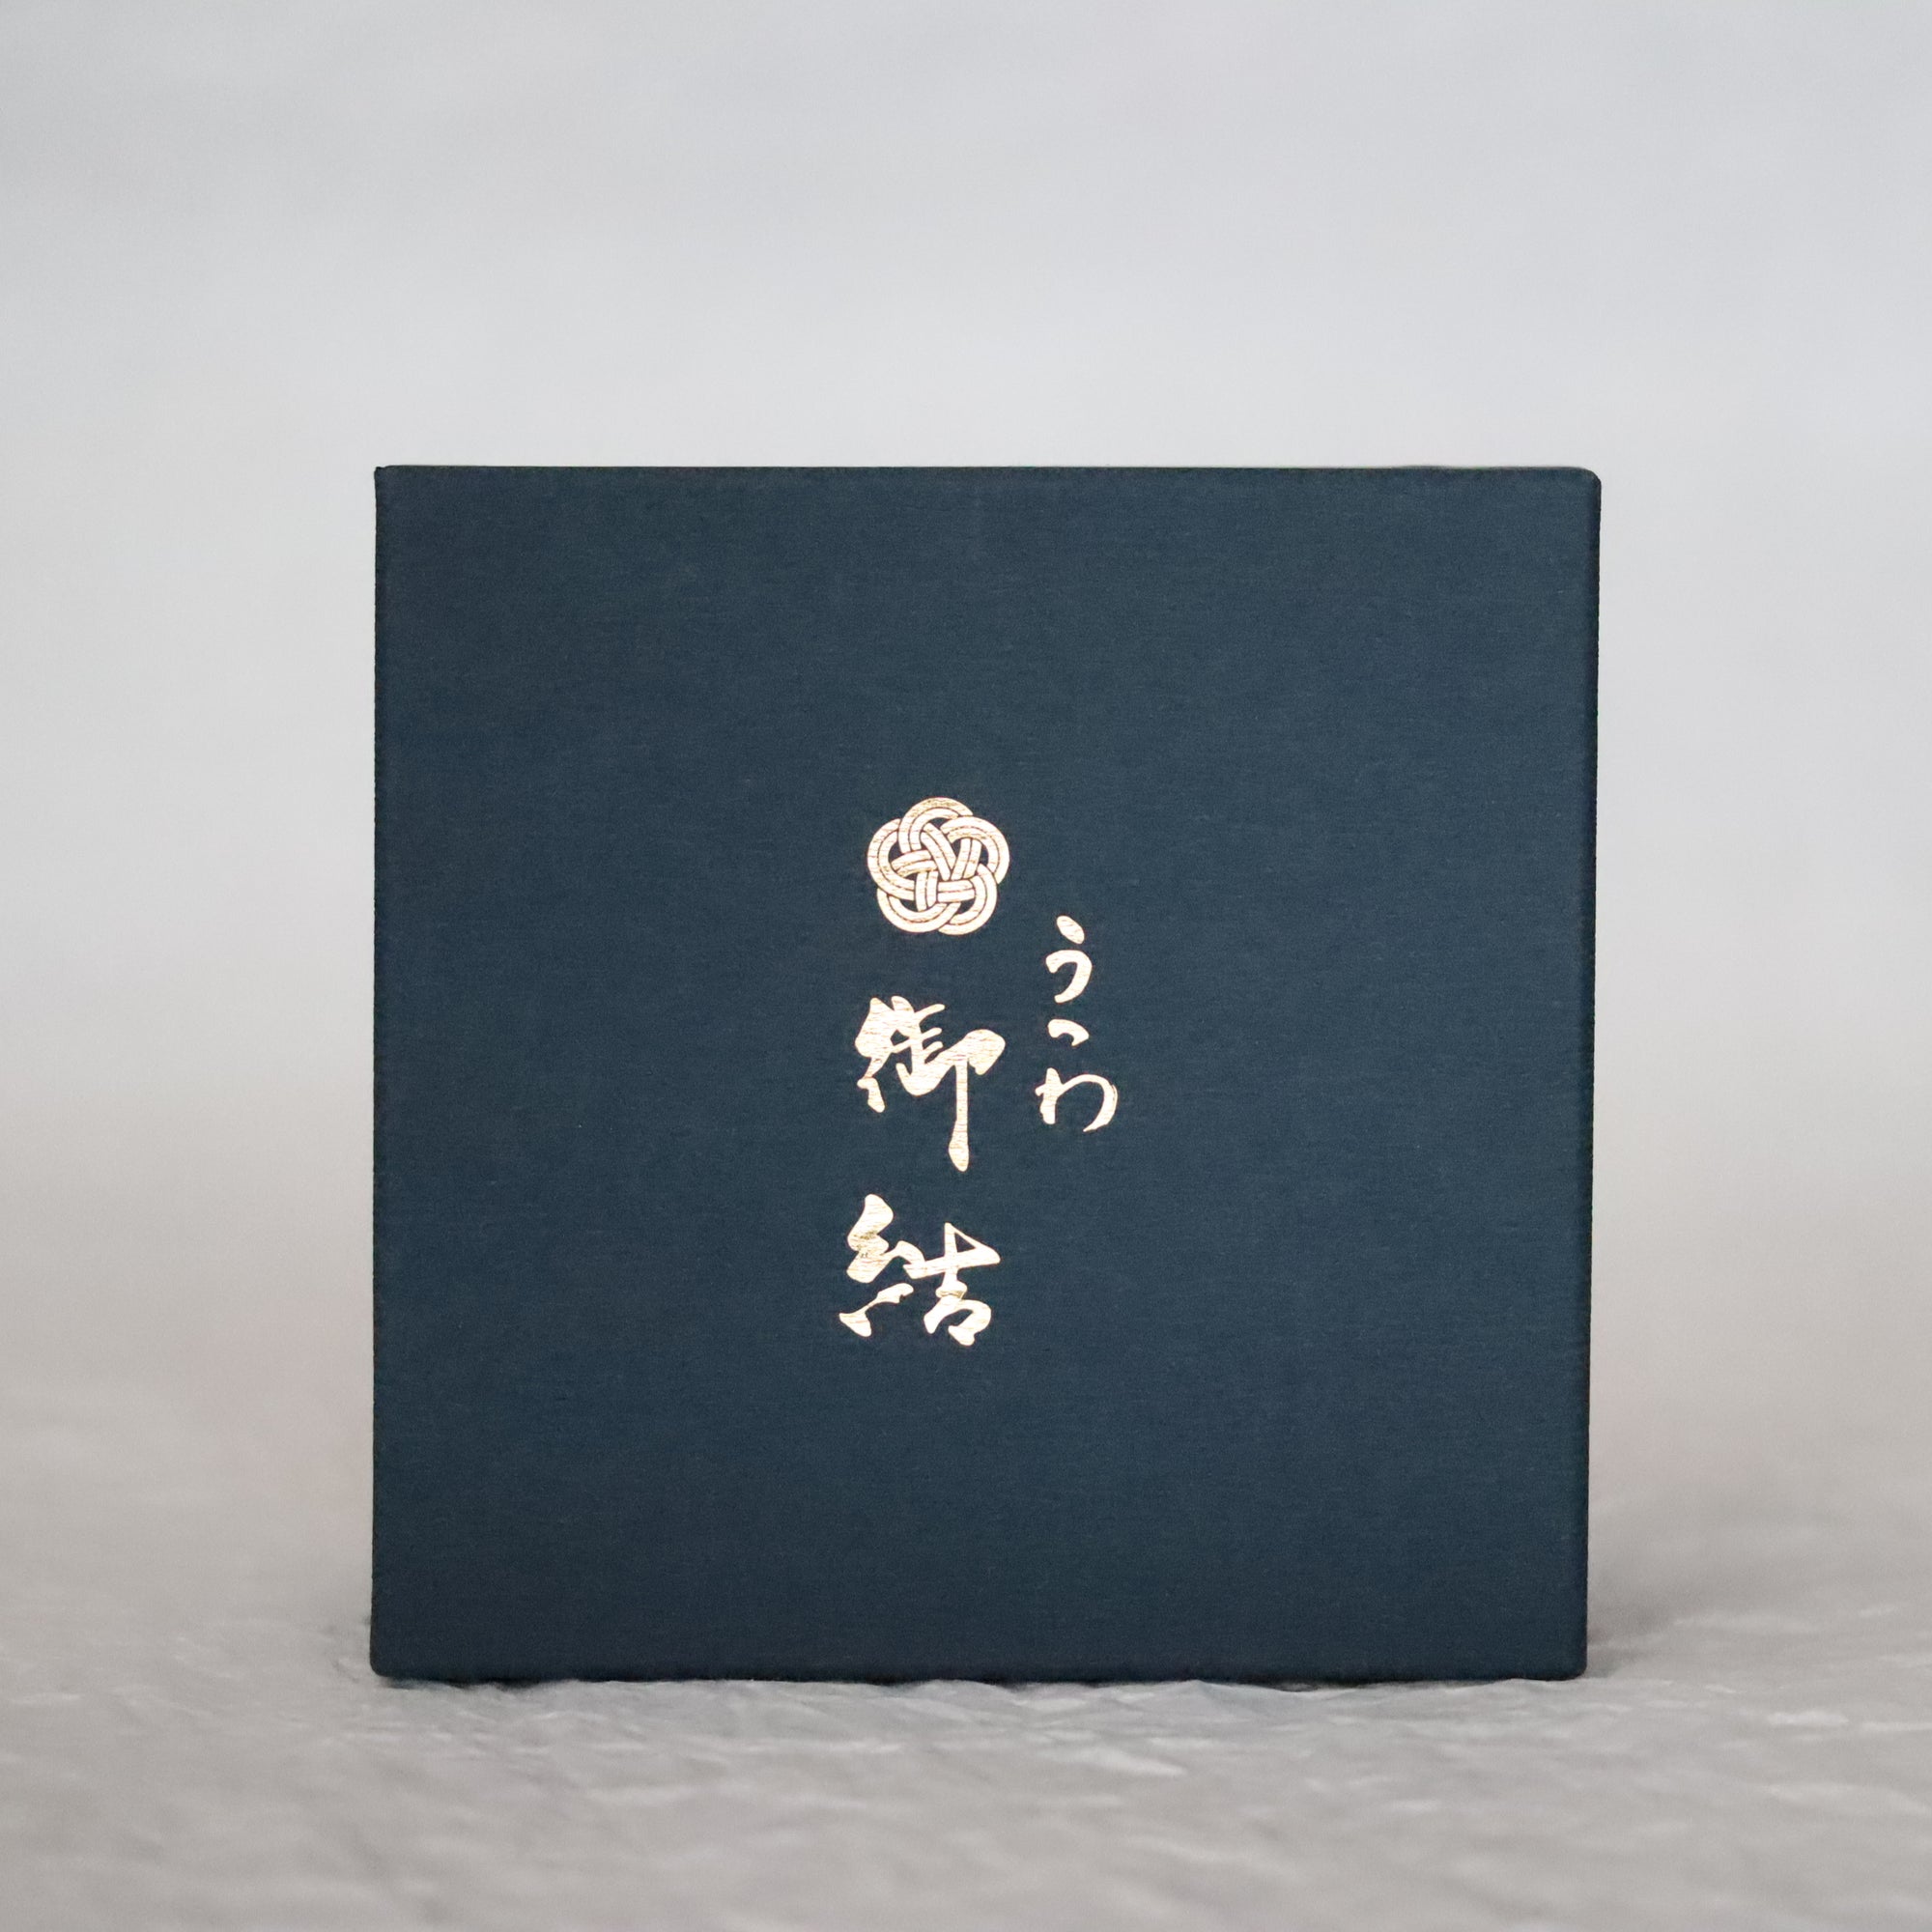 Miyu gift box S, M, L common 